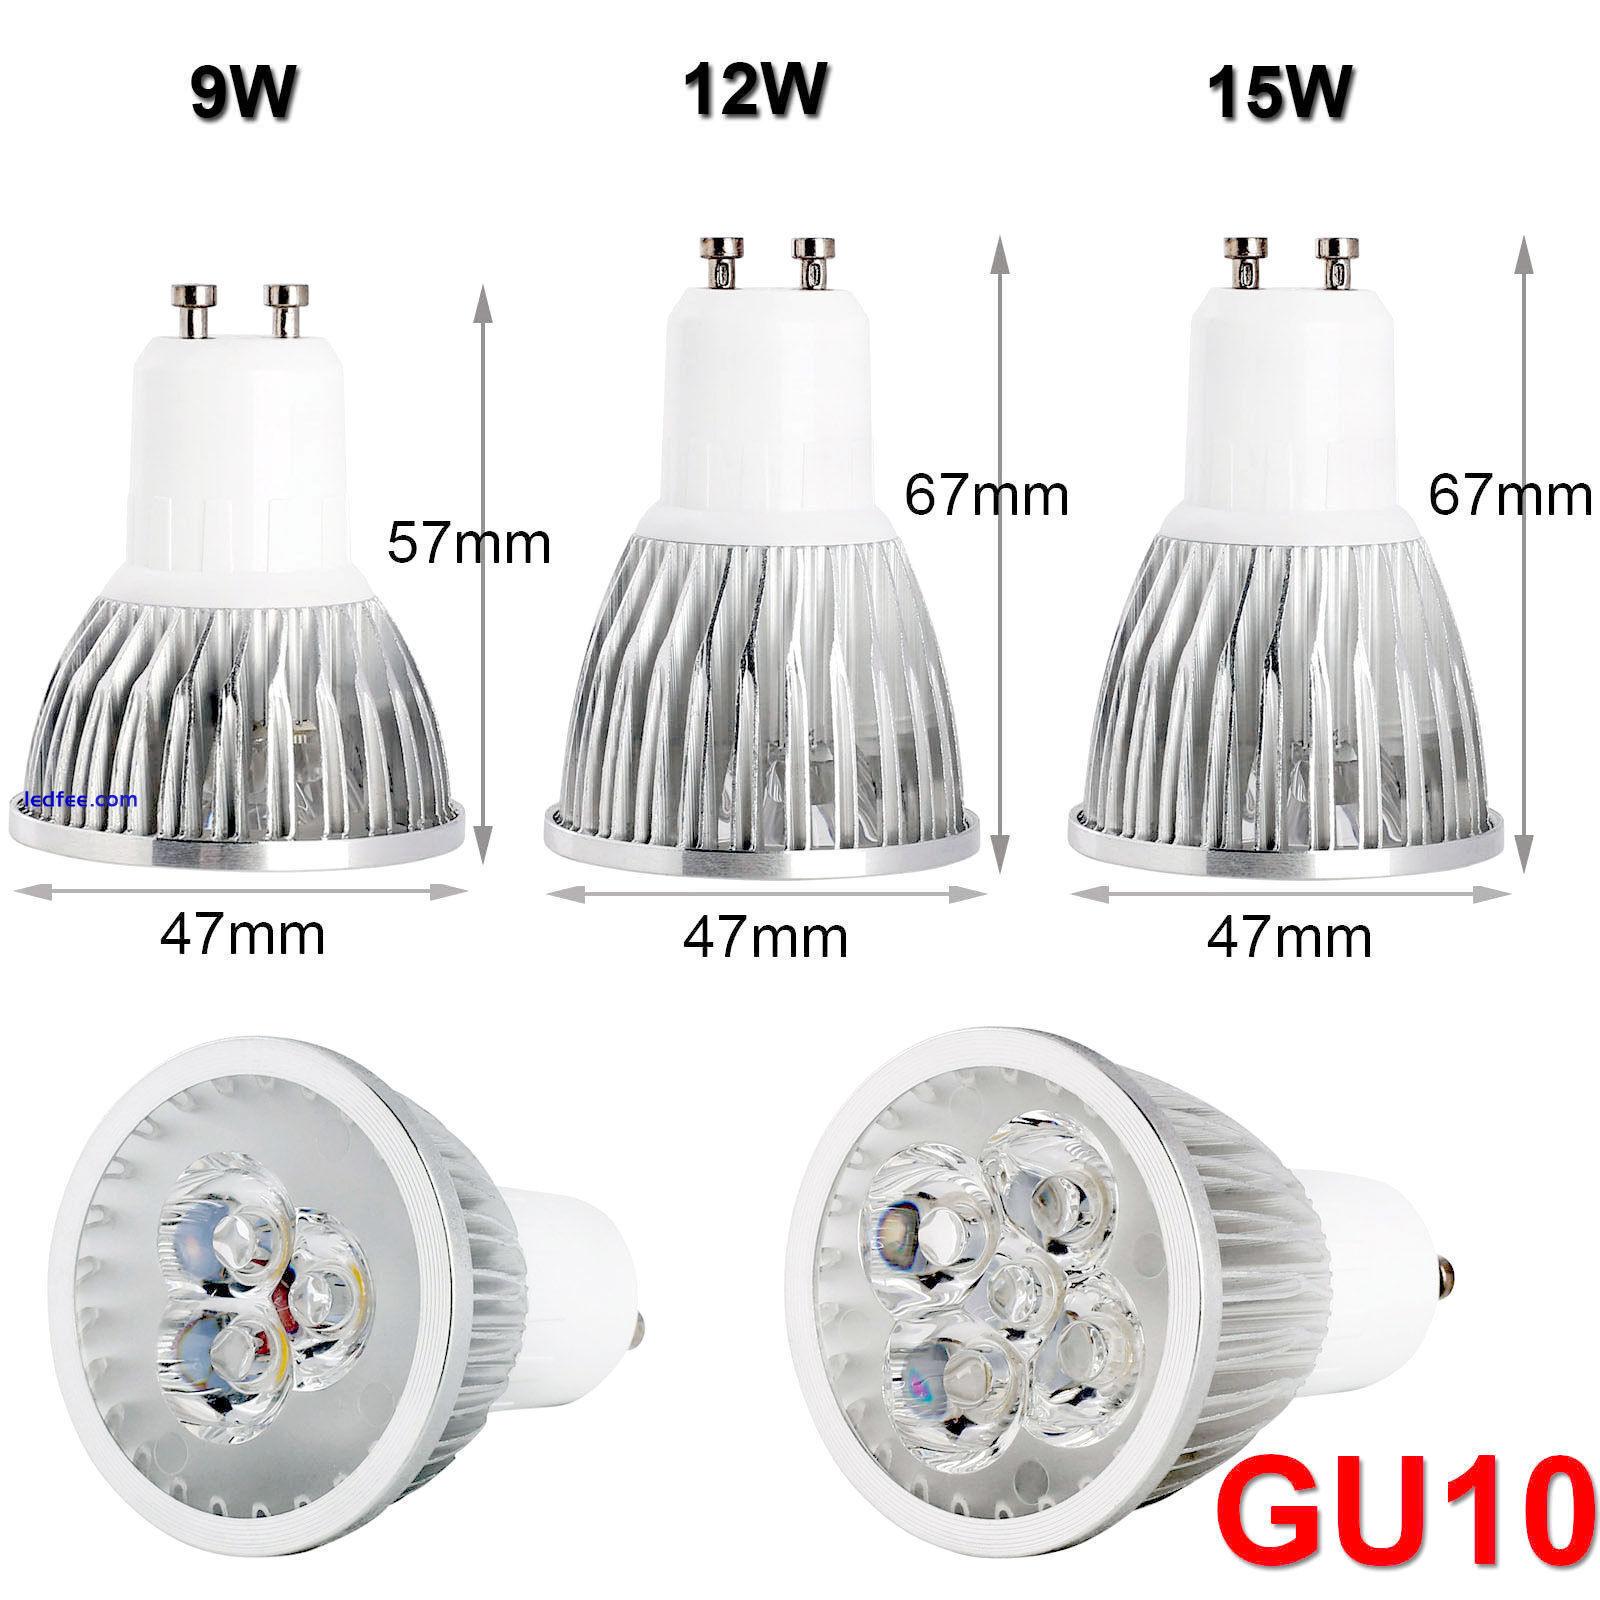 Muticolor GU10 MR16 Dimmable LED Spotlight Bulbs 9W 12W 15W 110V 220V 12V Lamps 3 